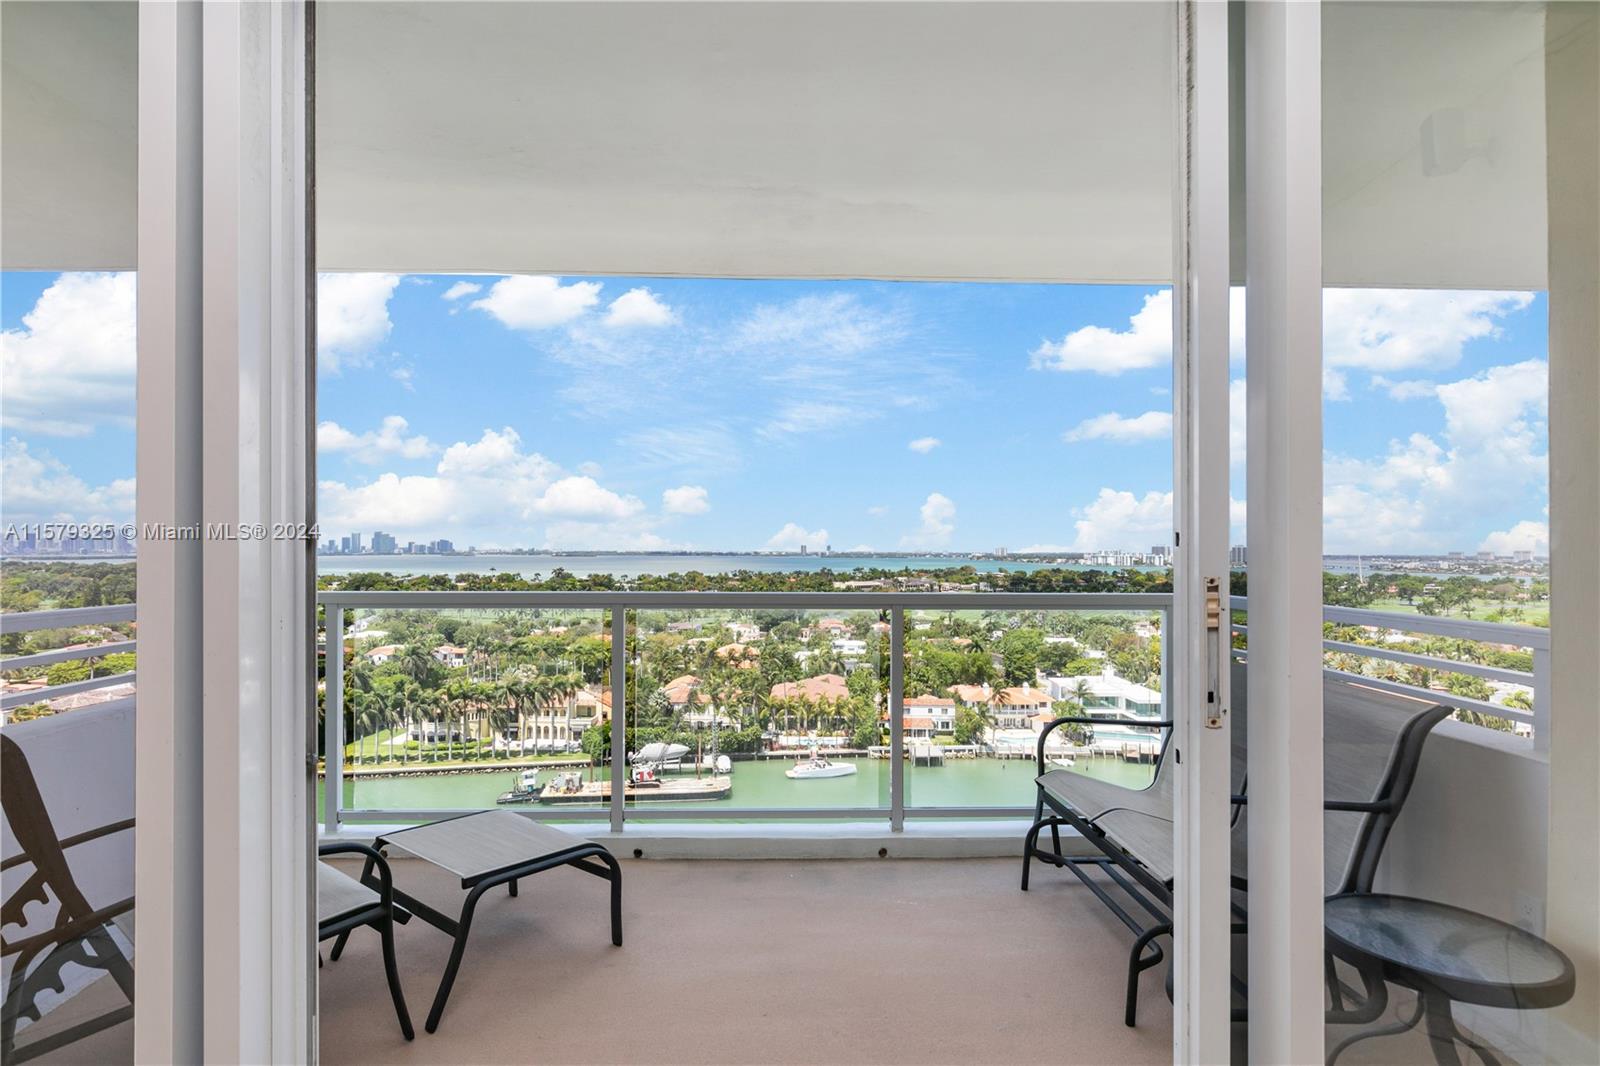 Rental Property at 5600 Collins Ave 17J, Miami Beach, Miami-Dade County, Florida - Bedrooms: 2 
Bathrooms: 2  - $4,100 MO.